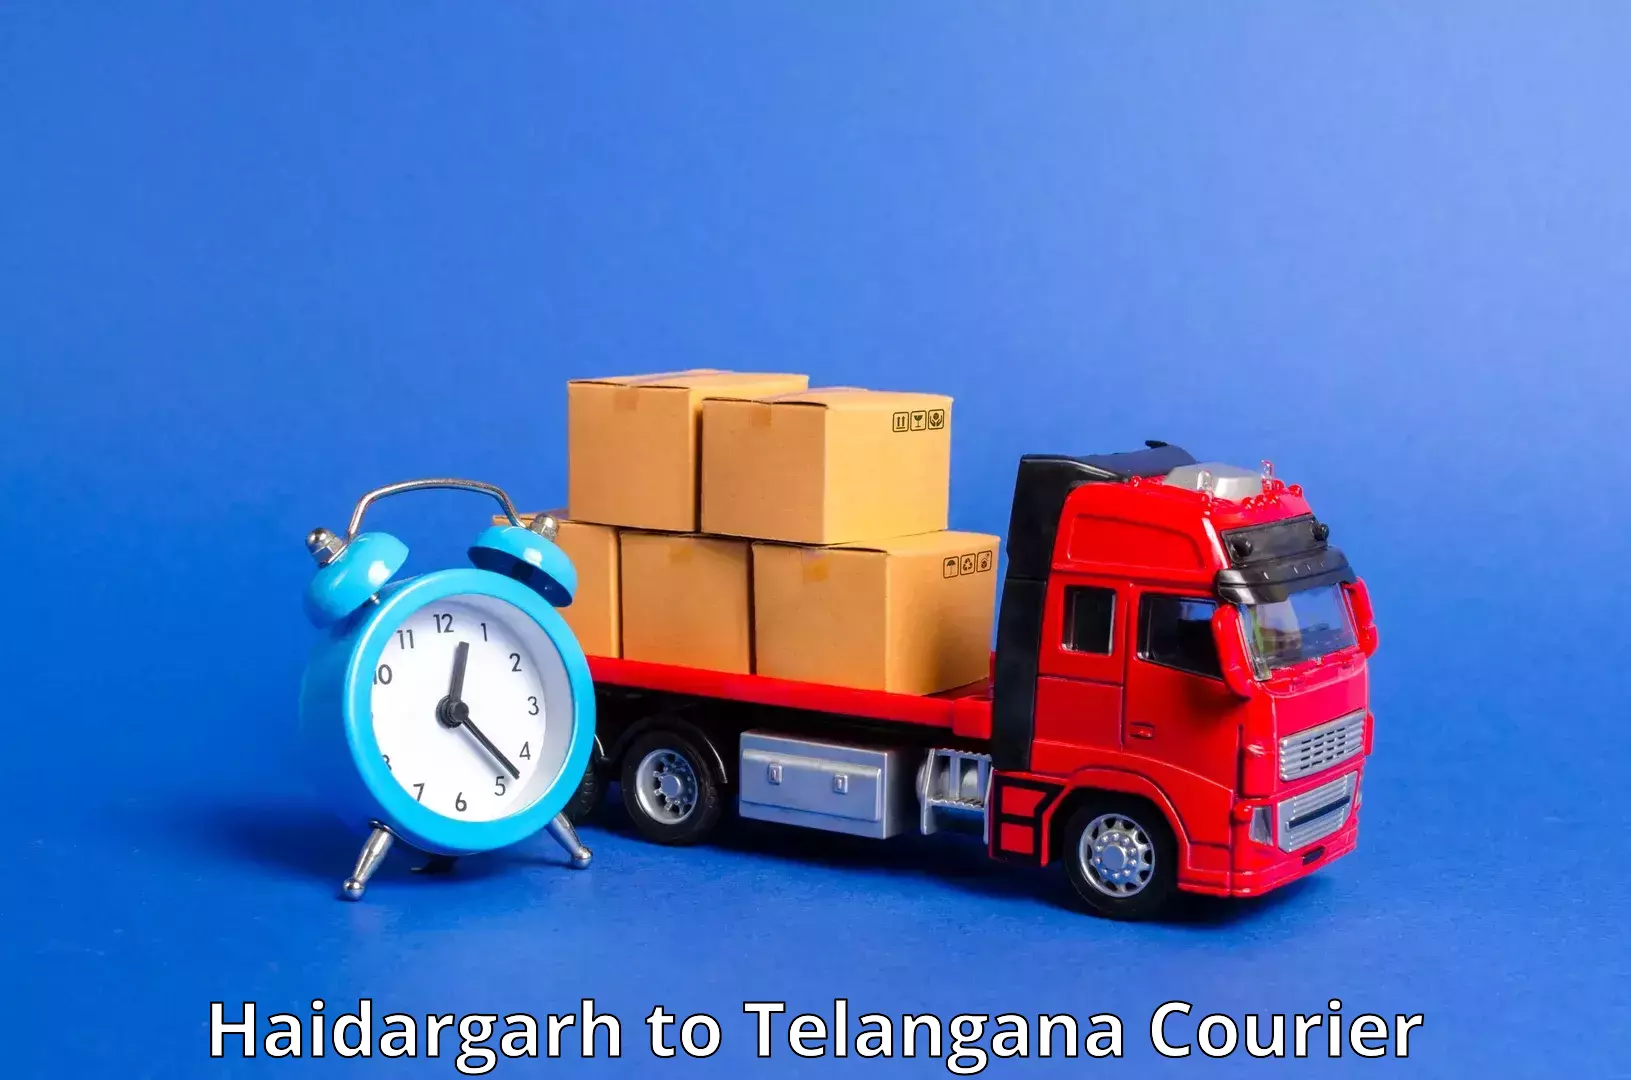 Individual parcel service Haidargarh to Eligedu